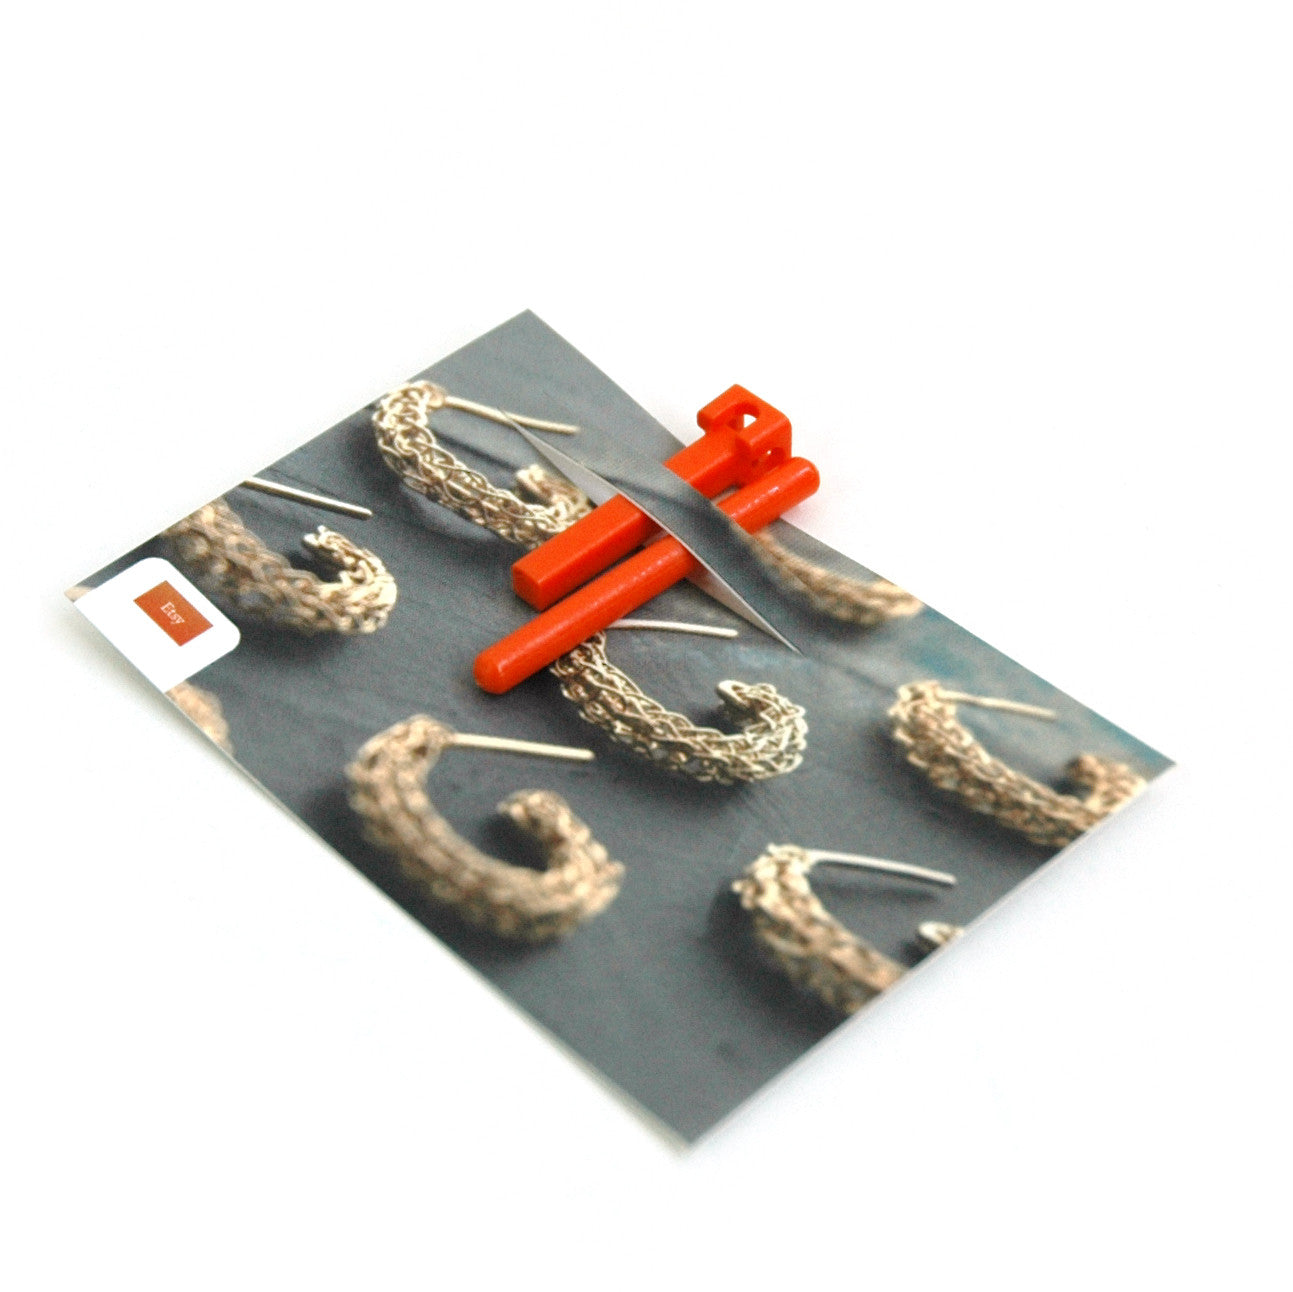 Wire crochet supply - a set of XS crochet hooks by YoolaDesign. -  Yooladesign